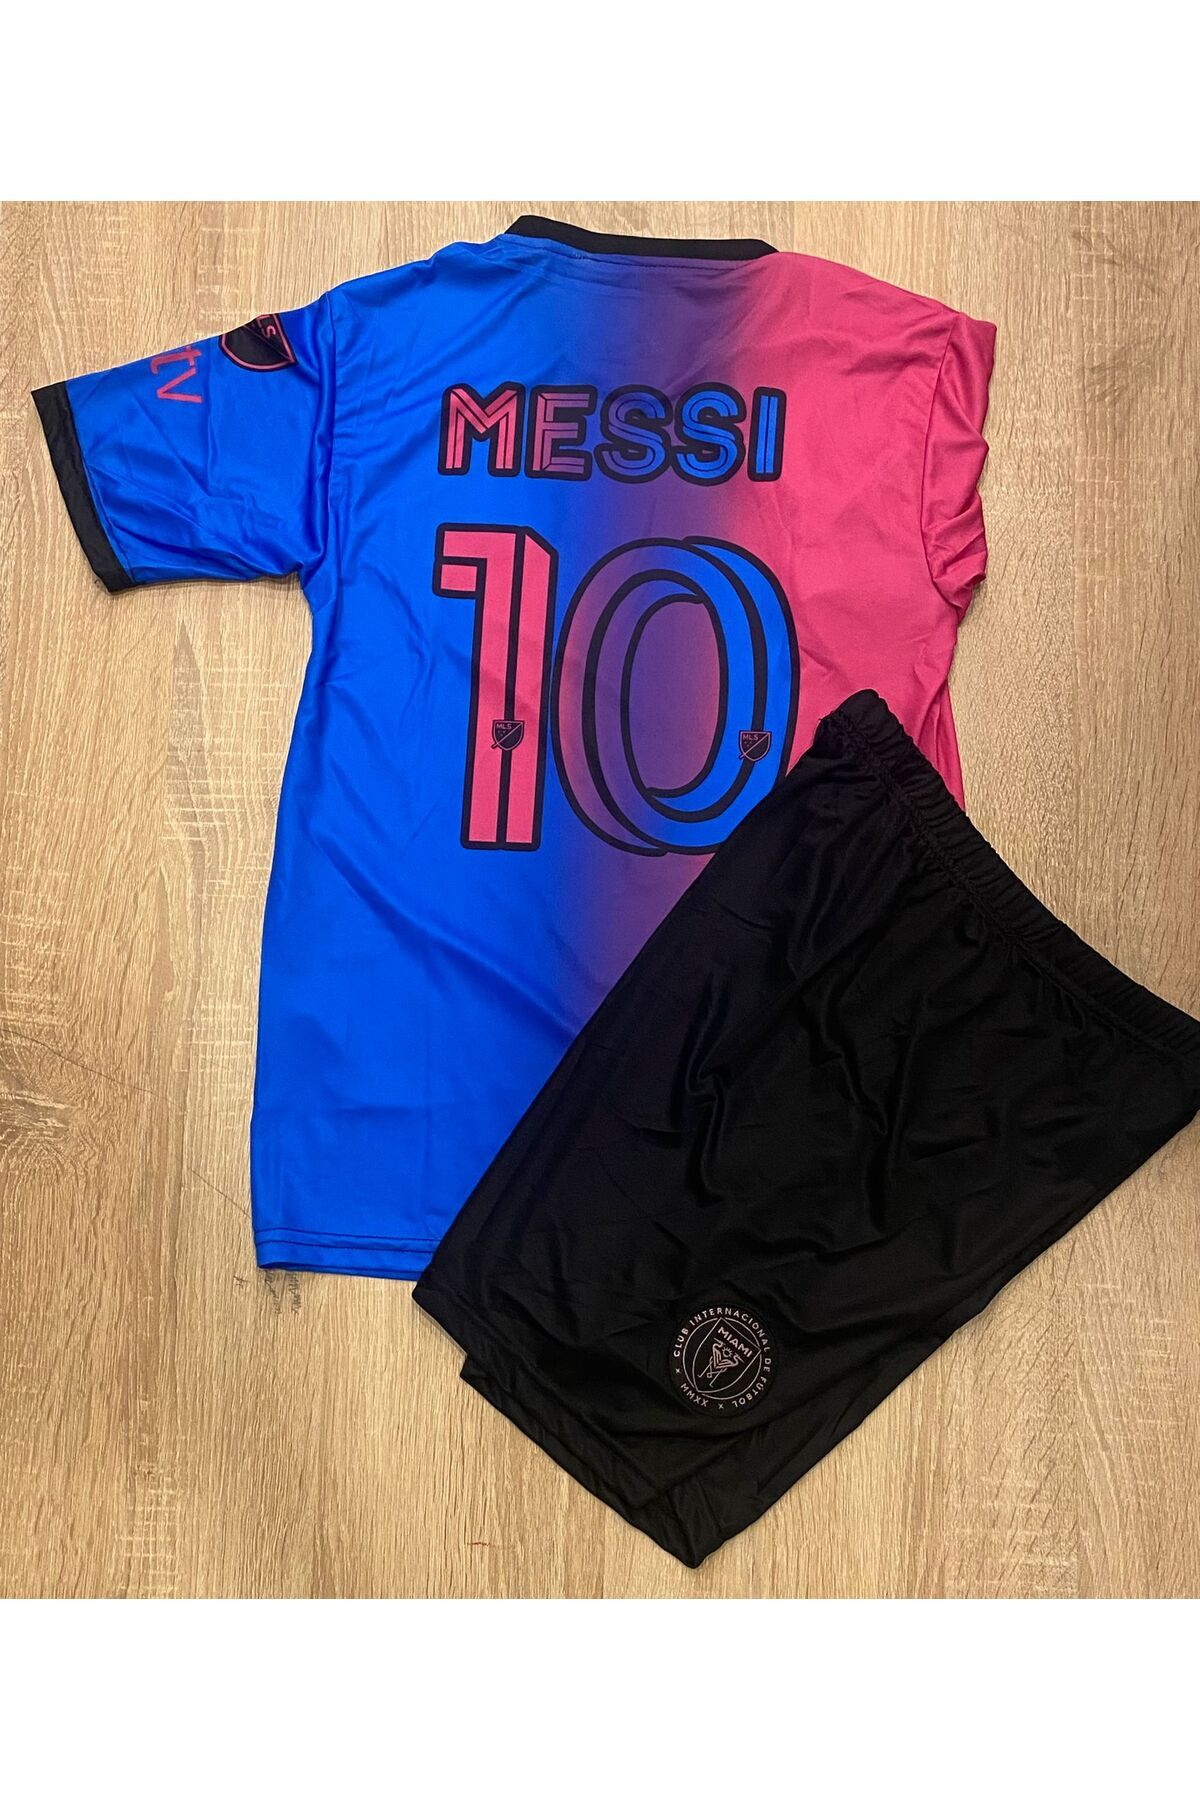 emia spor Messi Çocuk Futbol Forması  Unisex